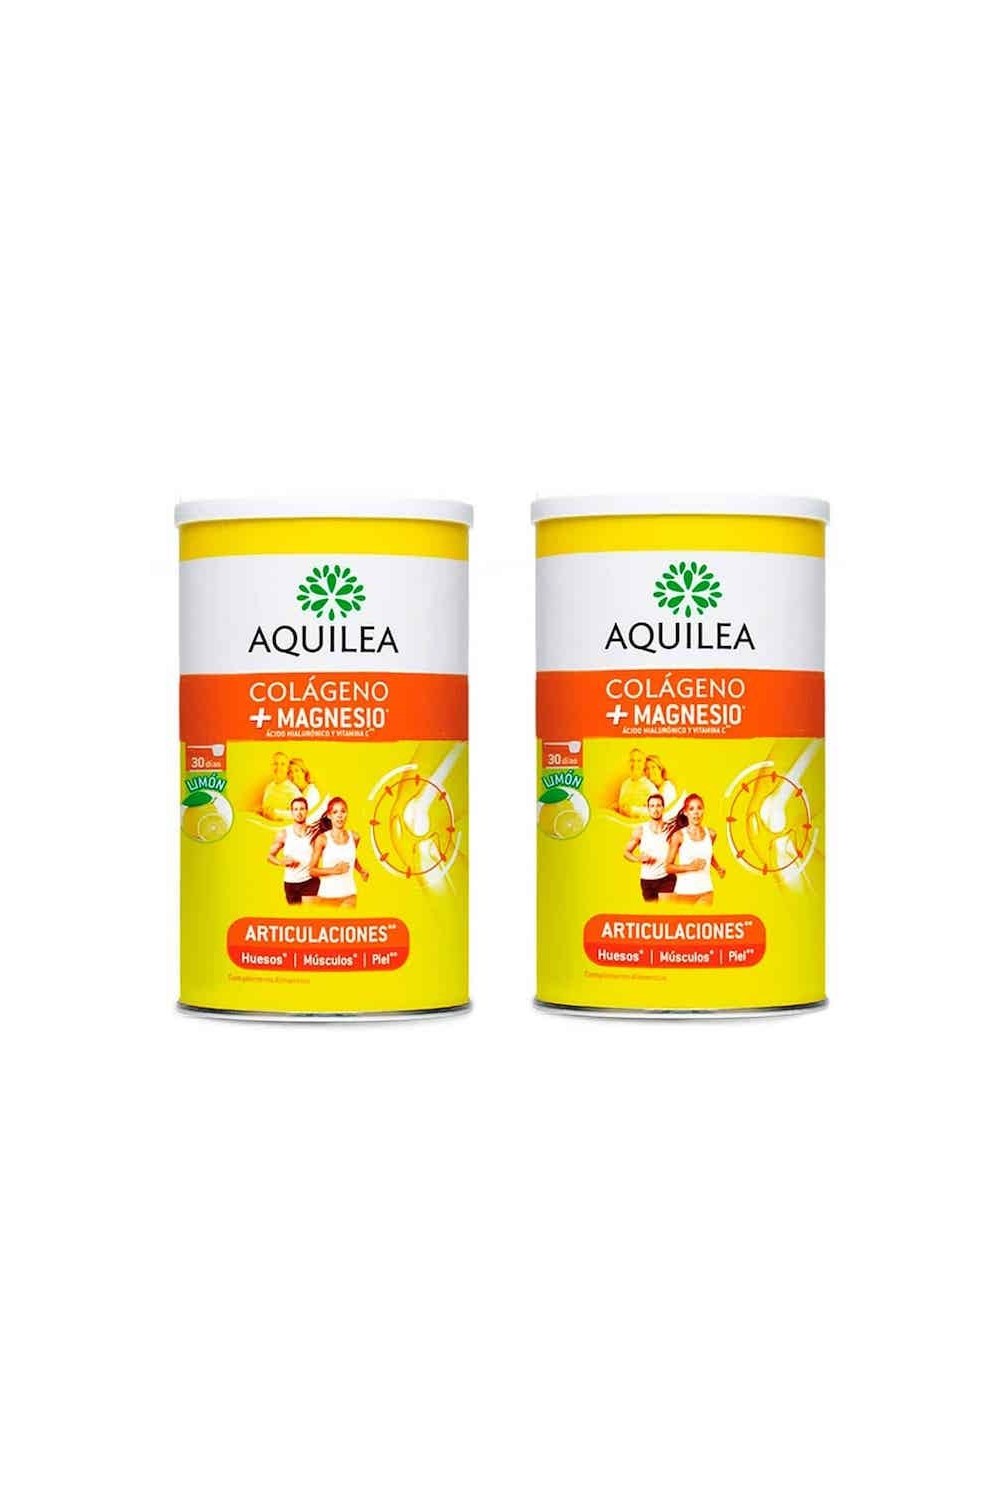 URIACH - Aquilea Artinova Collagen+Magnesium Pack 2x375g